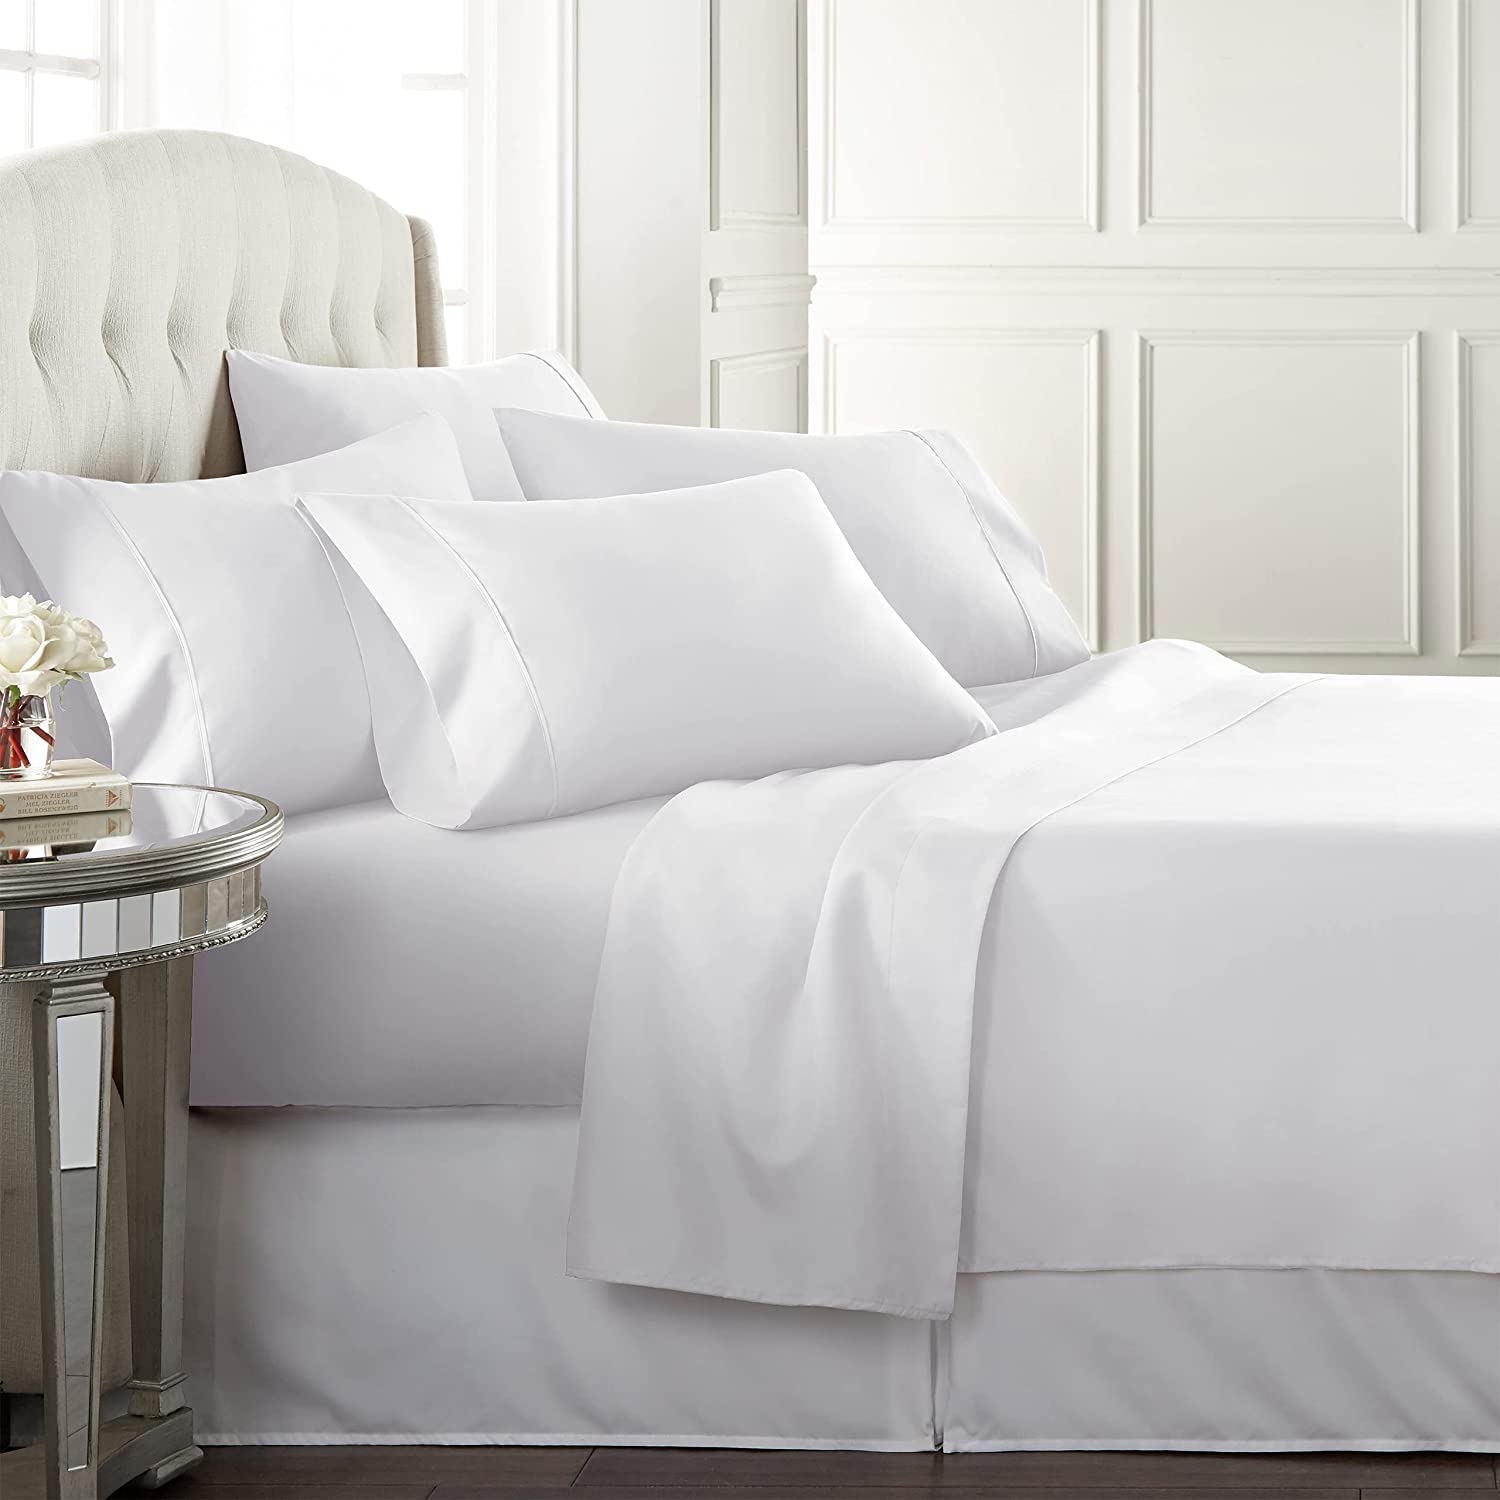 Danjor Linens Queen Size Bed Sheets Set